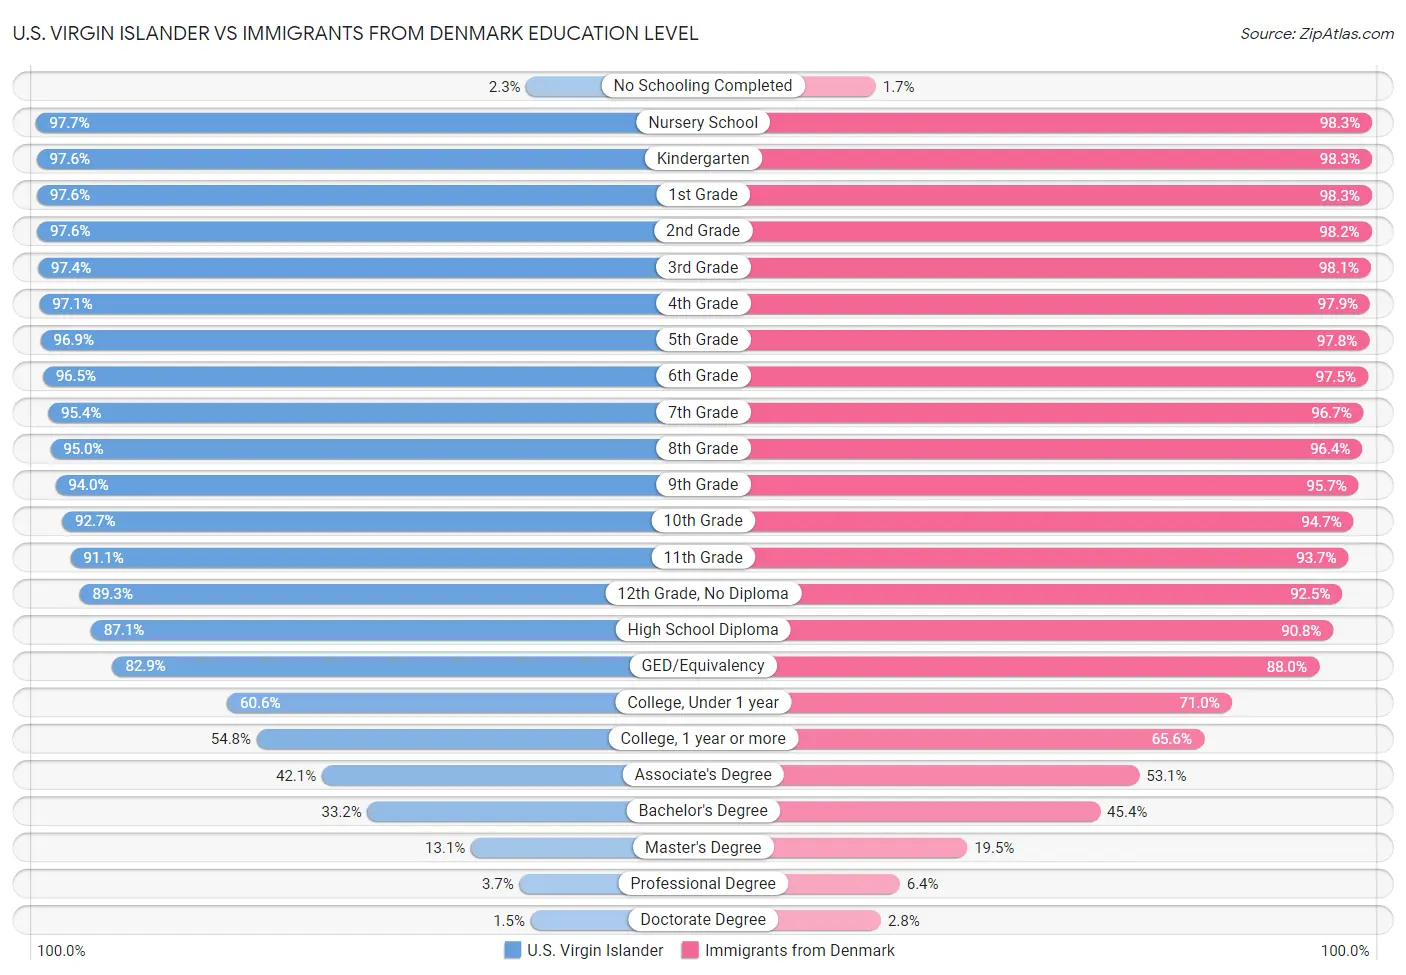 U.S. Virgin Islander vs Immigrants from Denmark Education Level